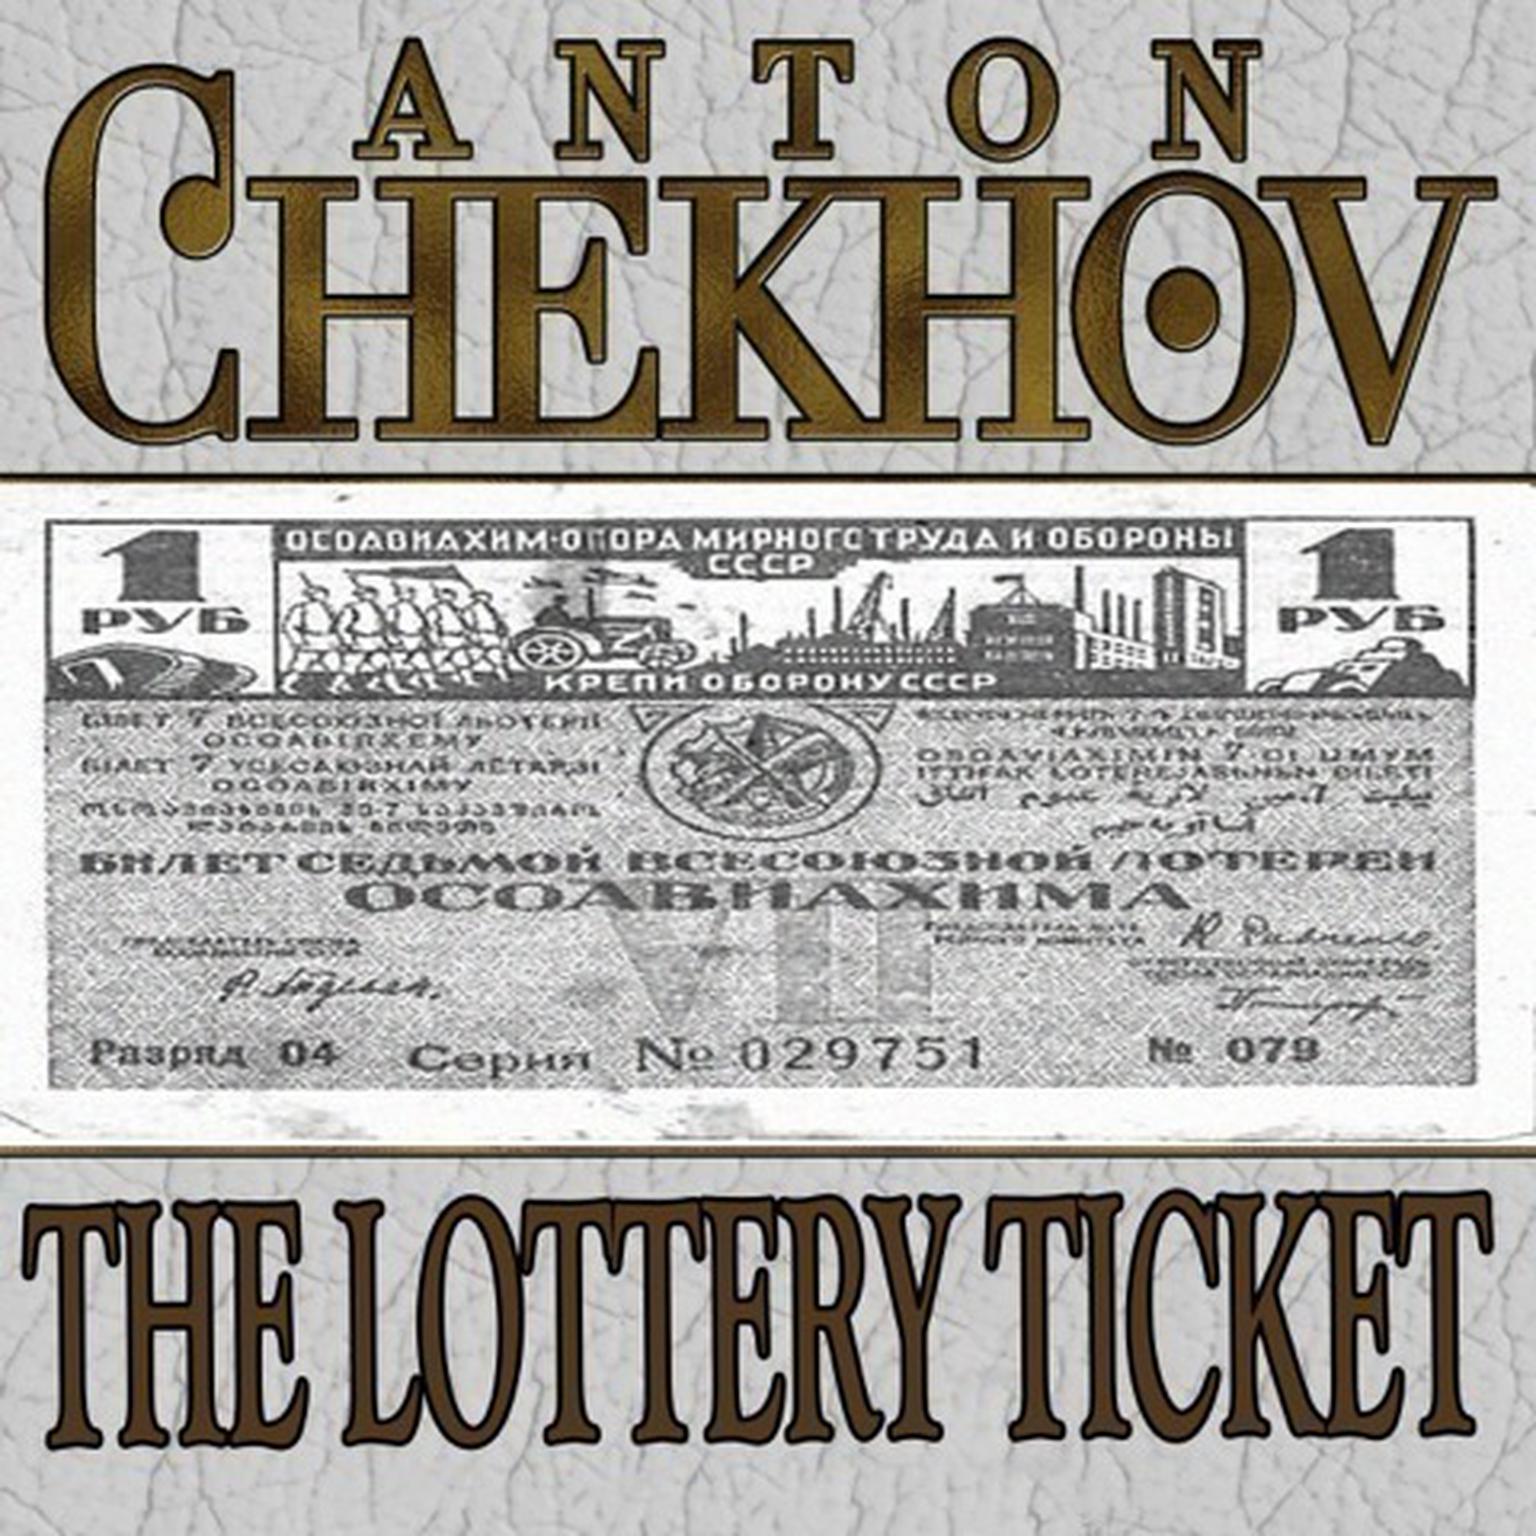 The Lottery Ticket Audiobook, by Anton Chekhov